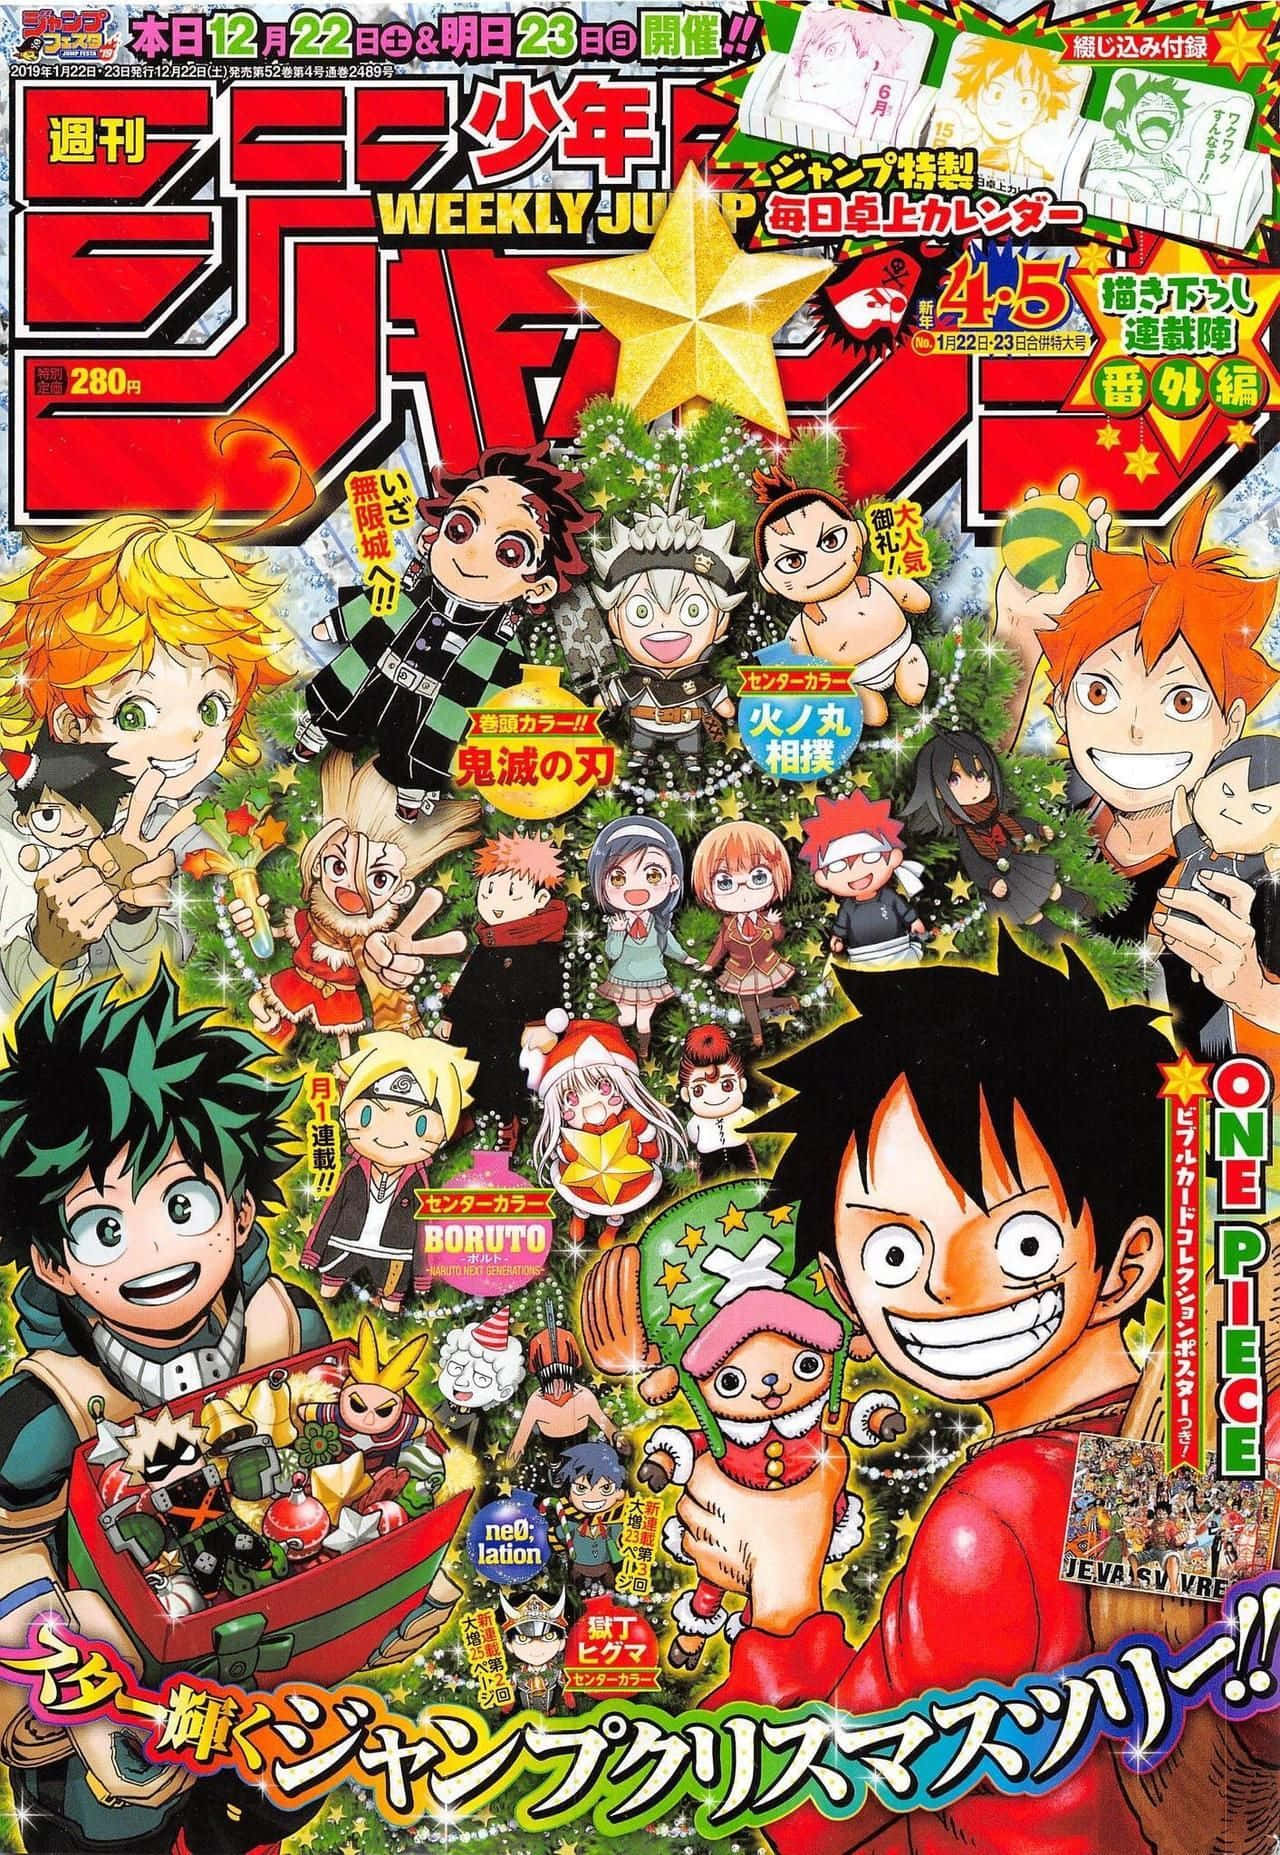 The Manga world of Shonen Jump Wallpaper